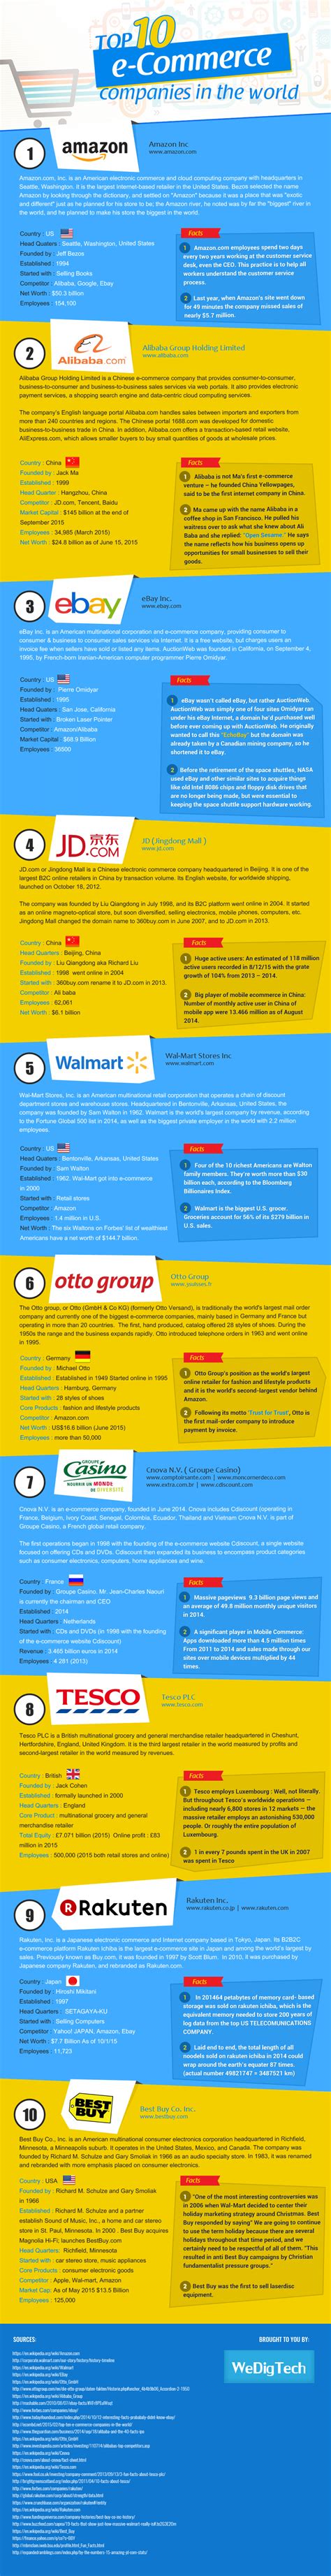 Top 10 e-commerce companies in the world - an infographic | Techno FAQ